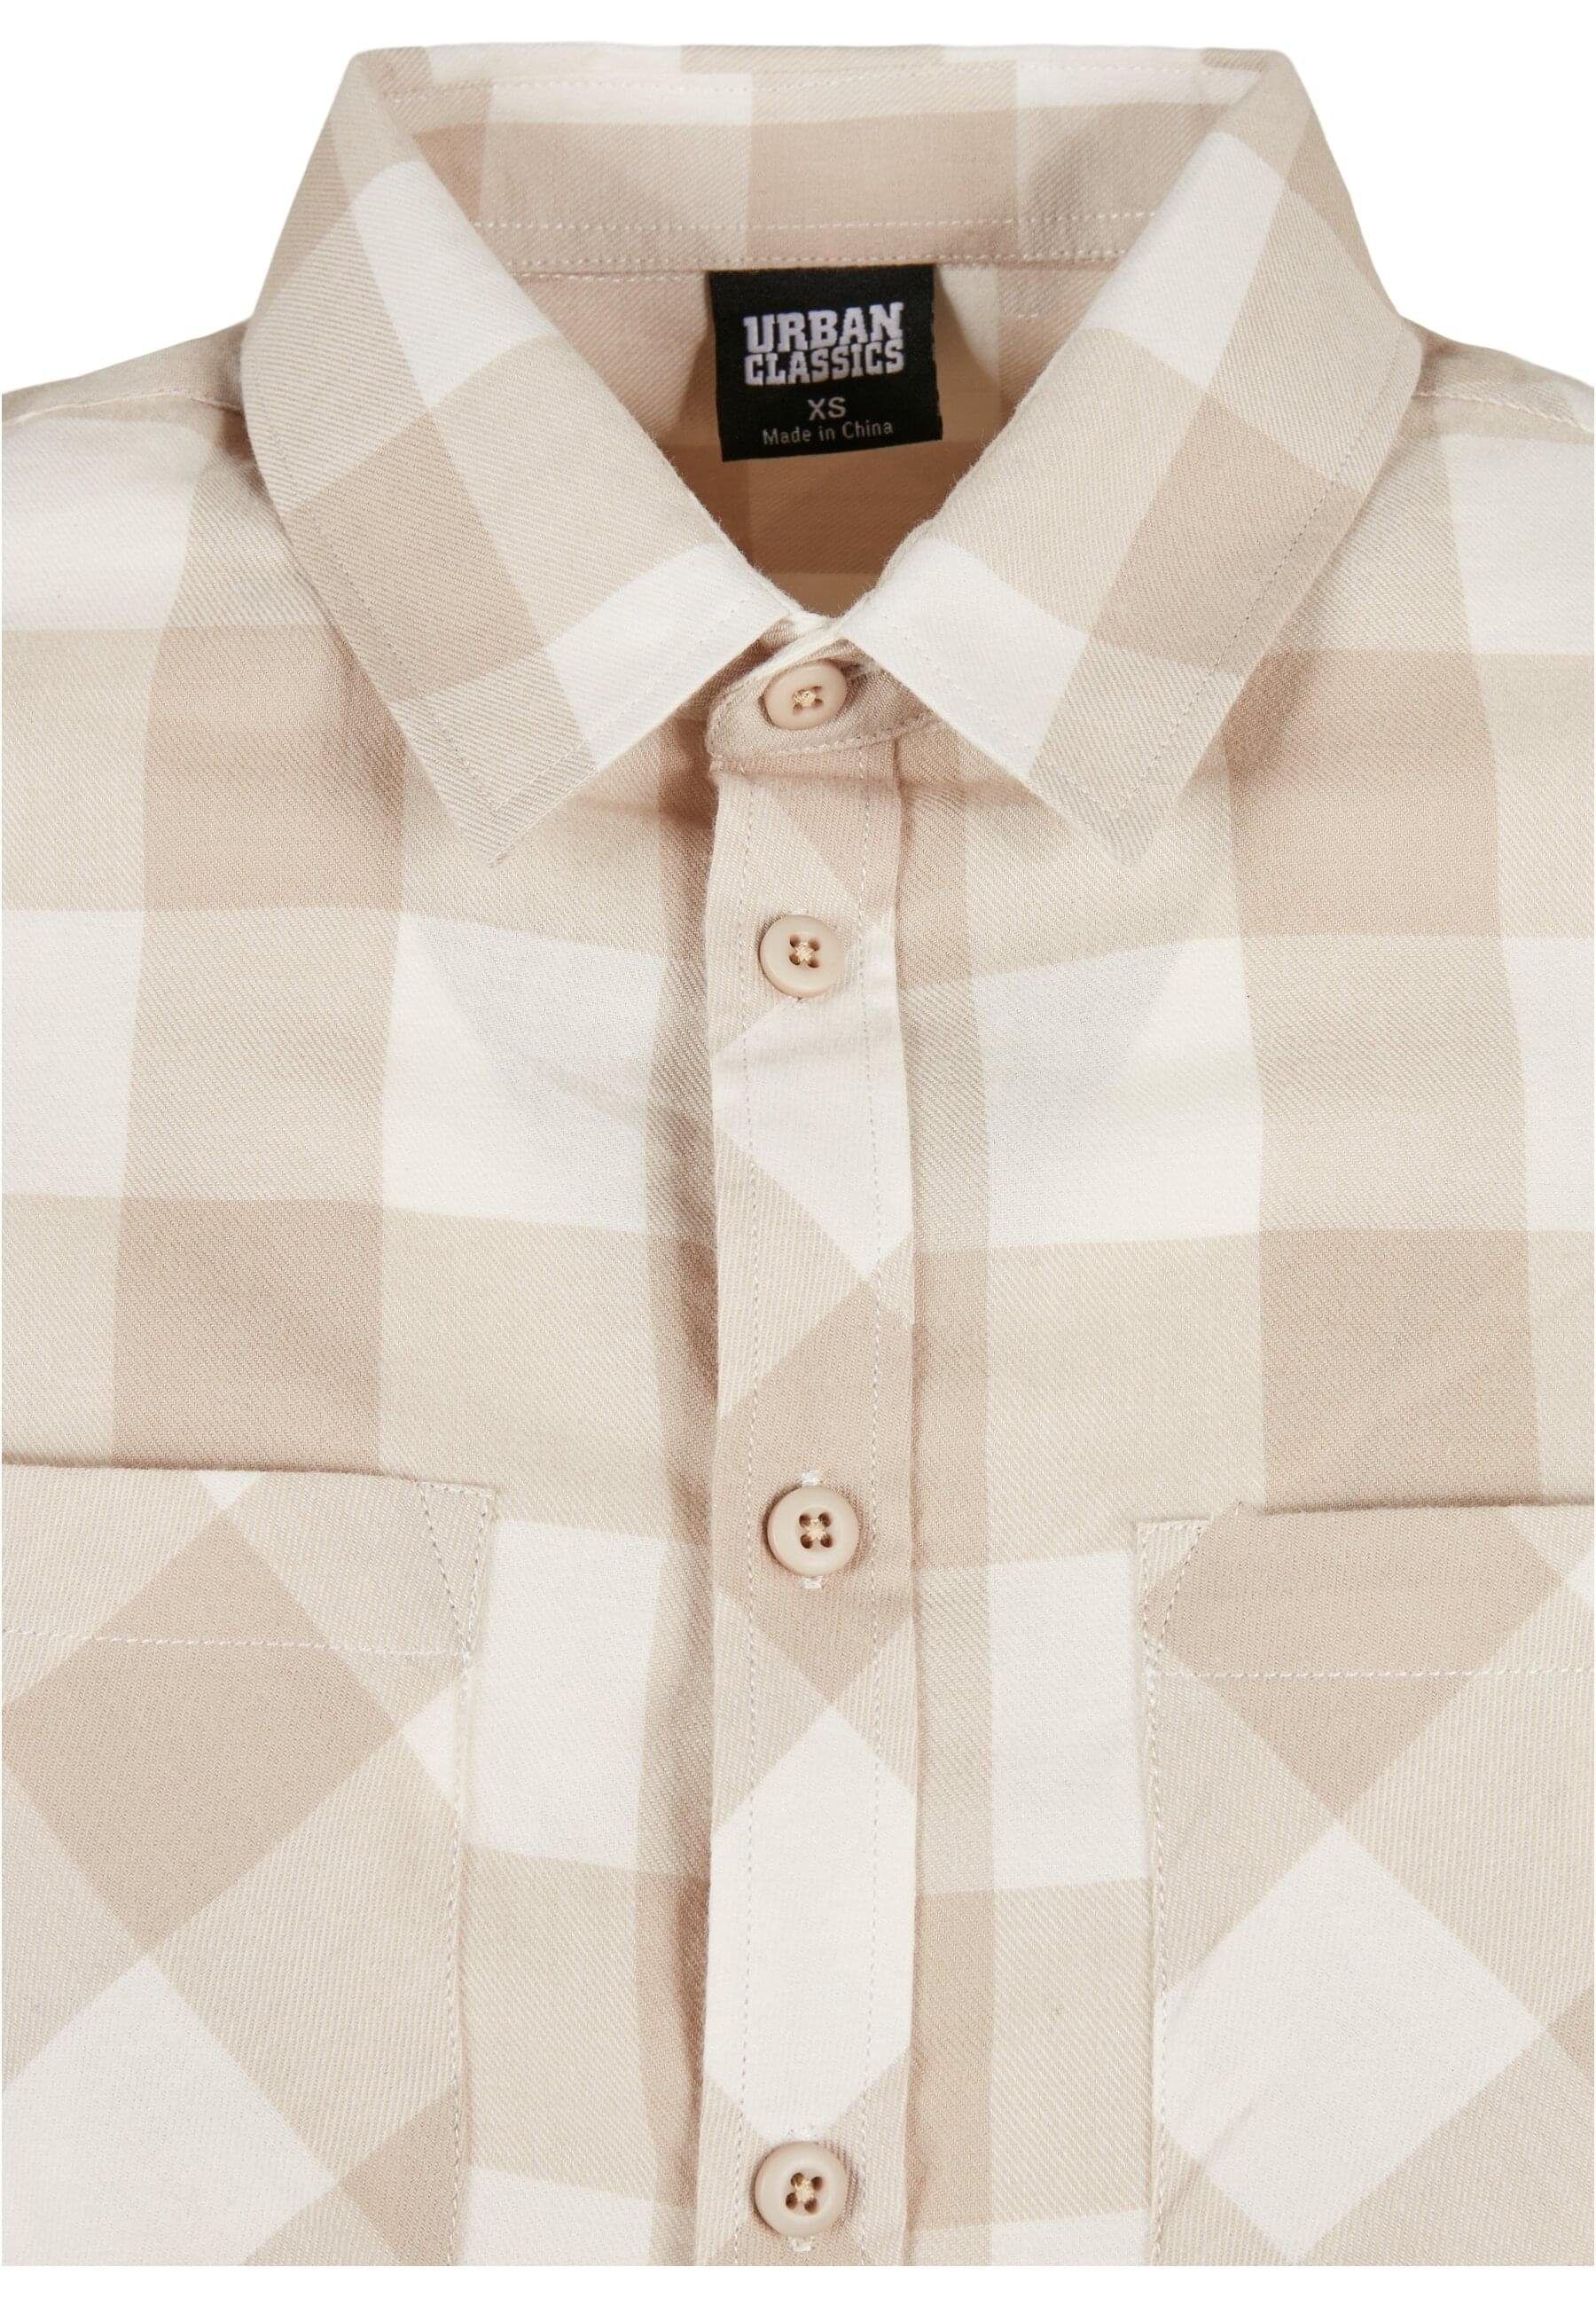 Ladies Checked Shirt URBAN Damen whitesand-lighttaupe Langarmhemd CLASSICS Turnup (1-tlg) Flanell